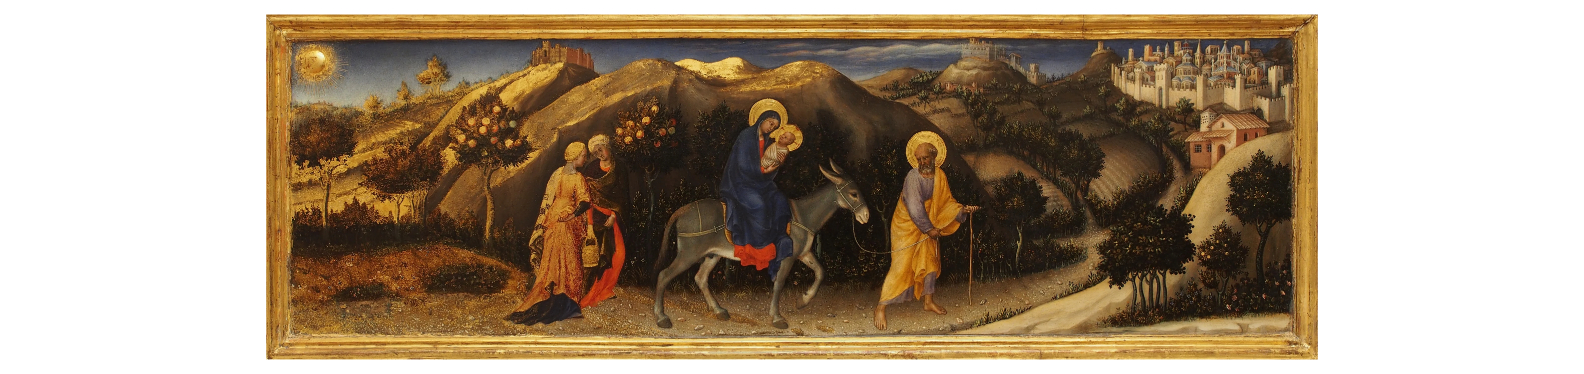 Jesus Mary and Joseph fleeing on a donkey